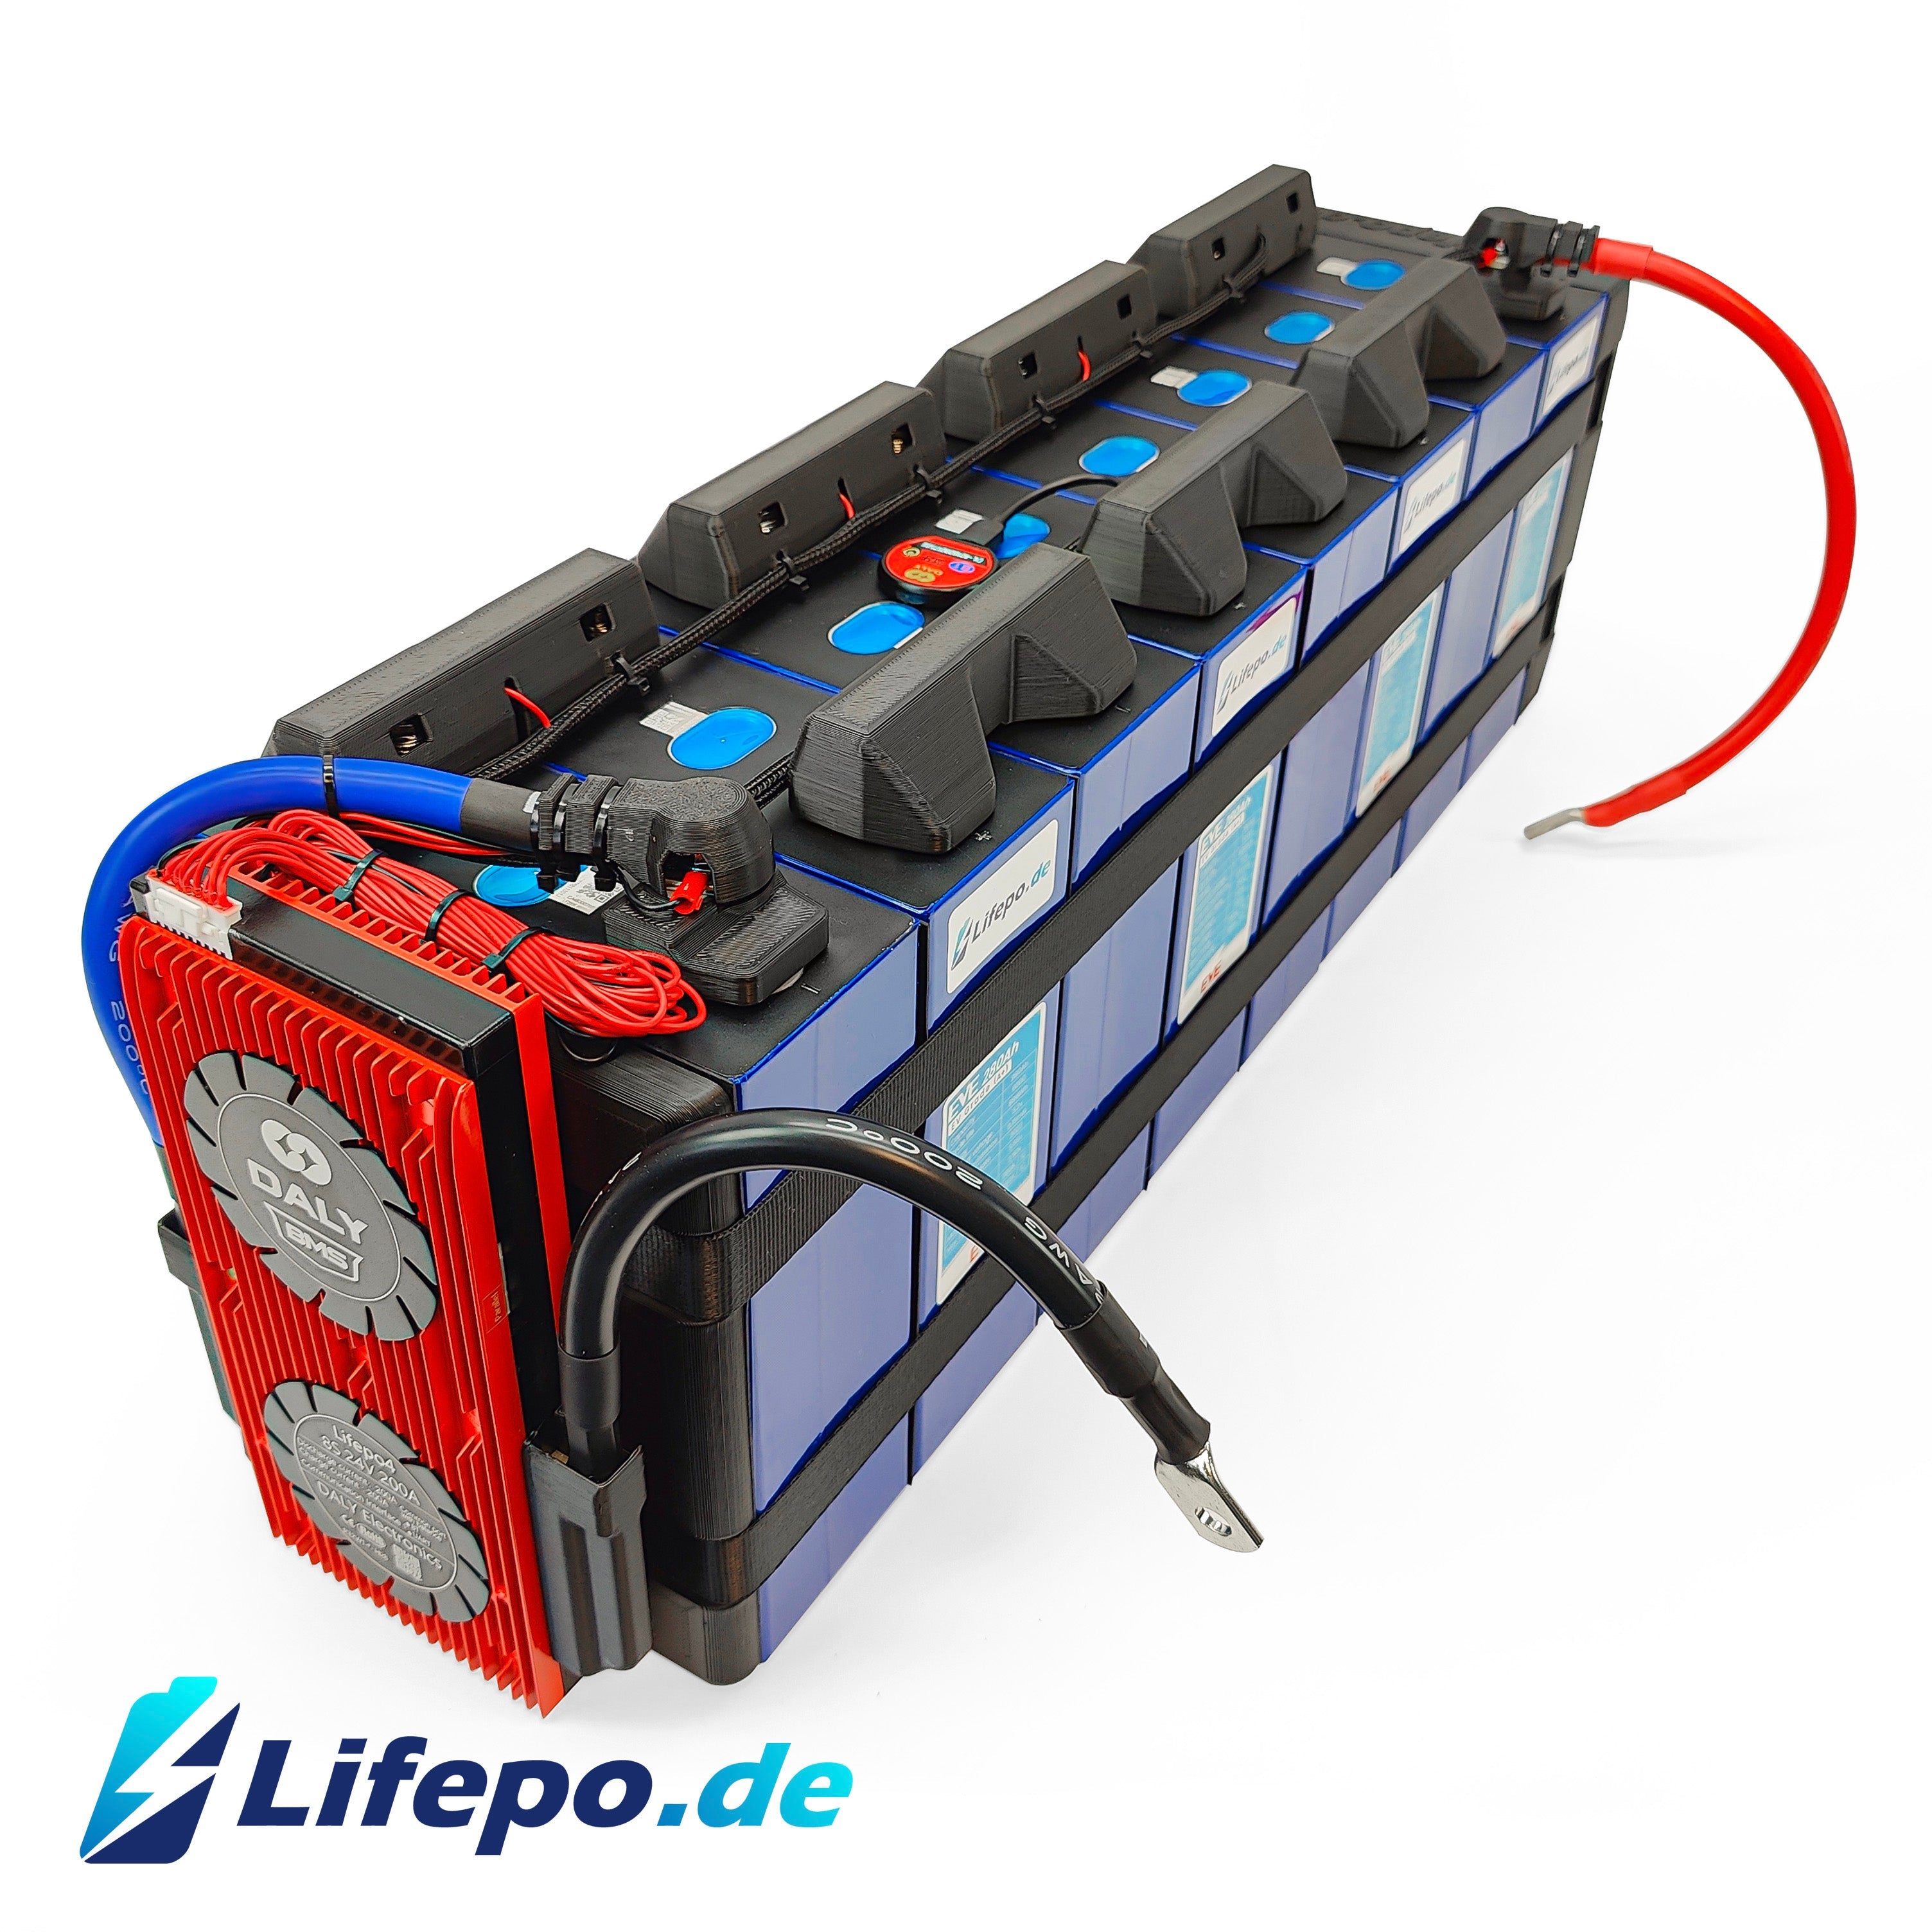 0% MwSt 24v 280Ah Lifepo4 Batteriesystem mit EVE Grade A+ 8kWh